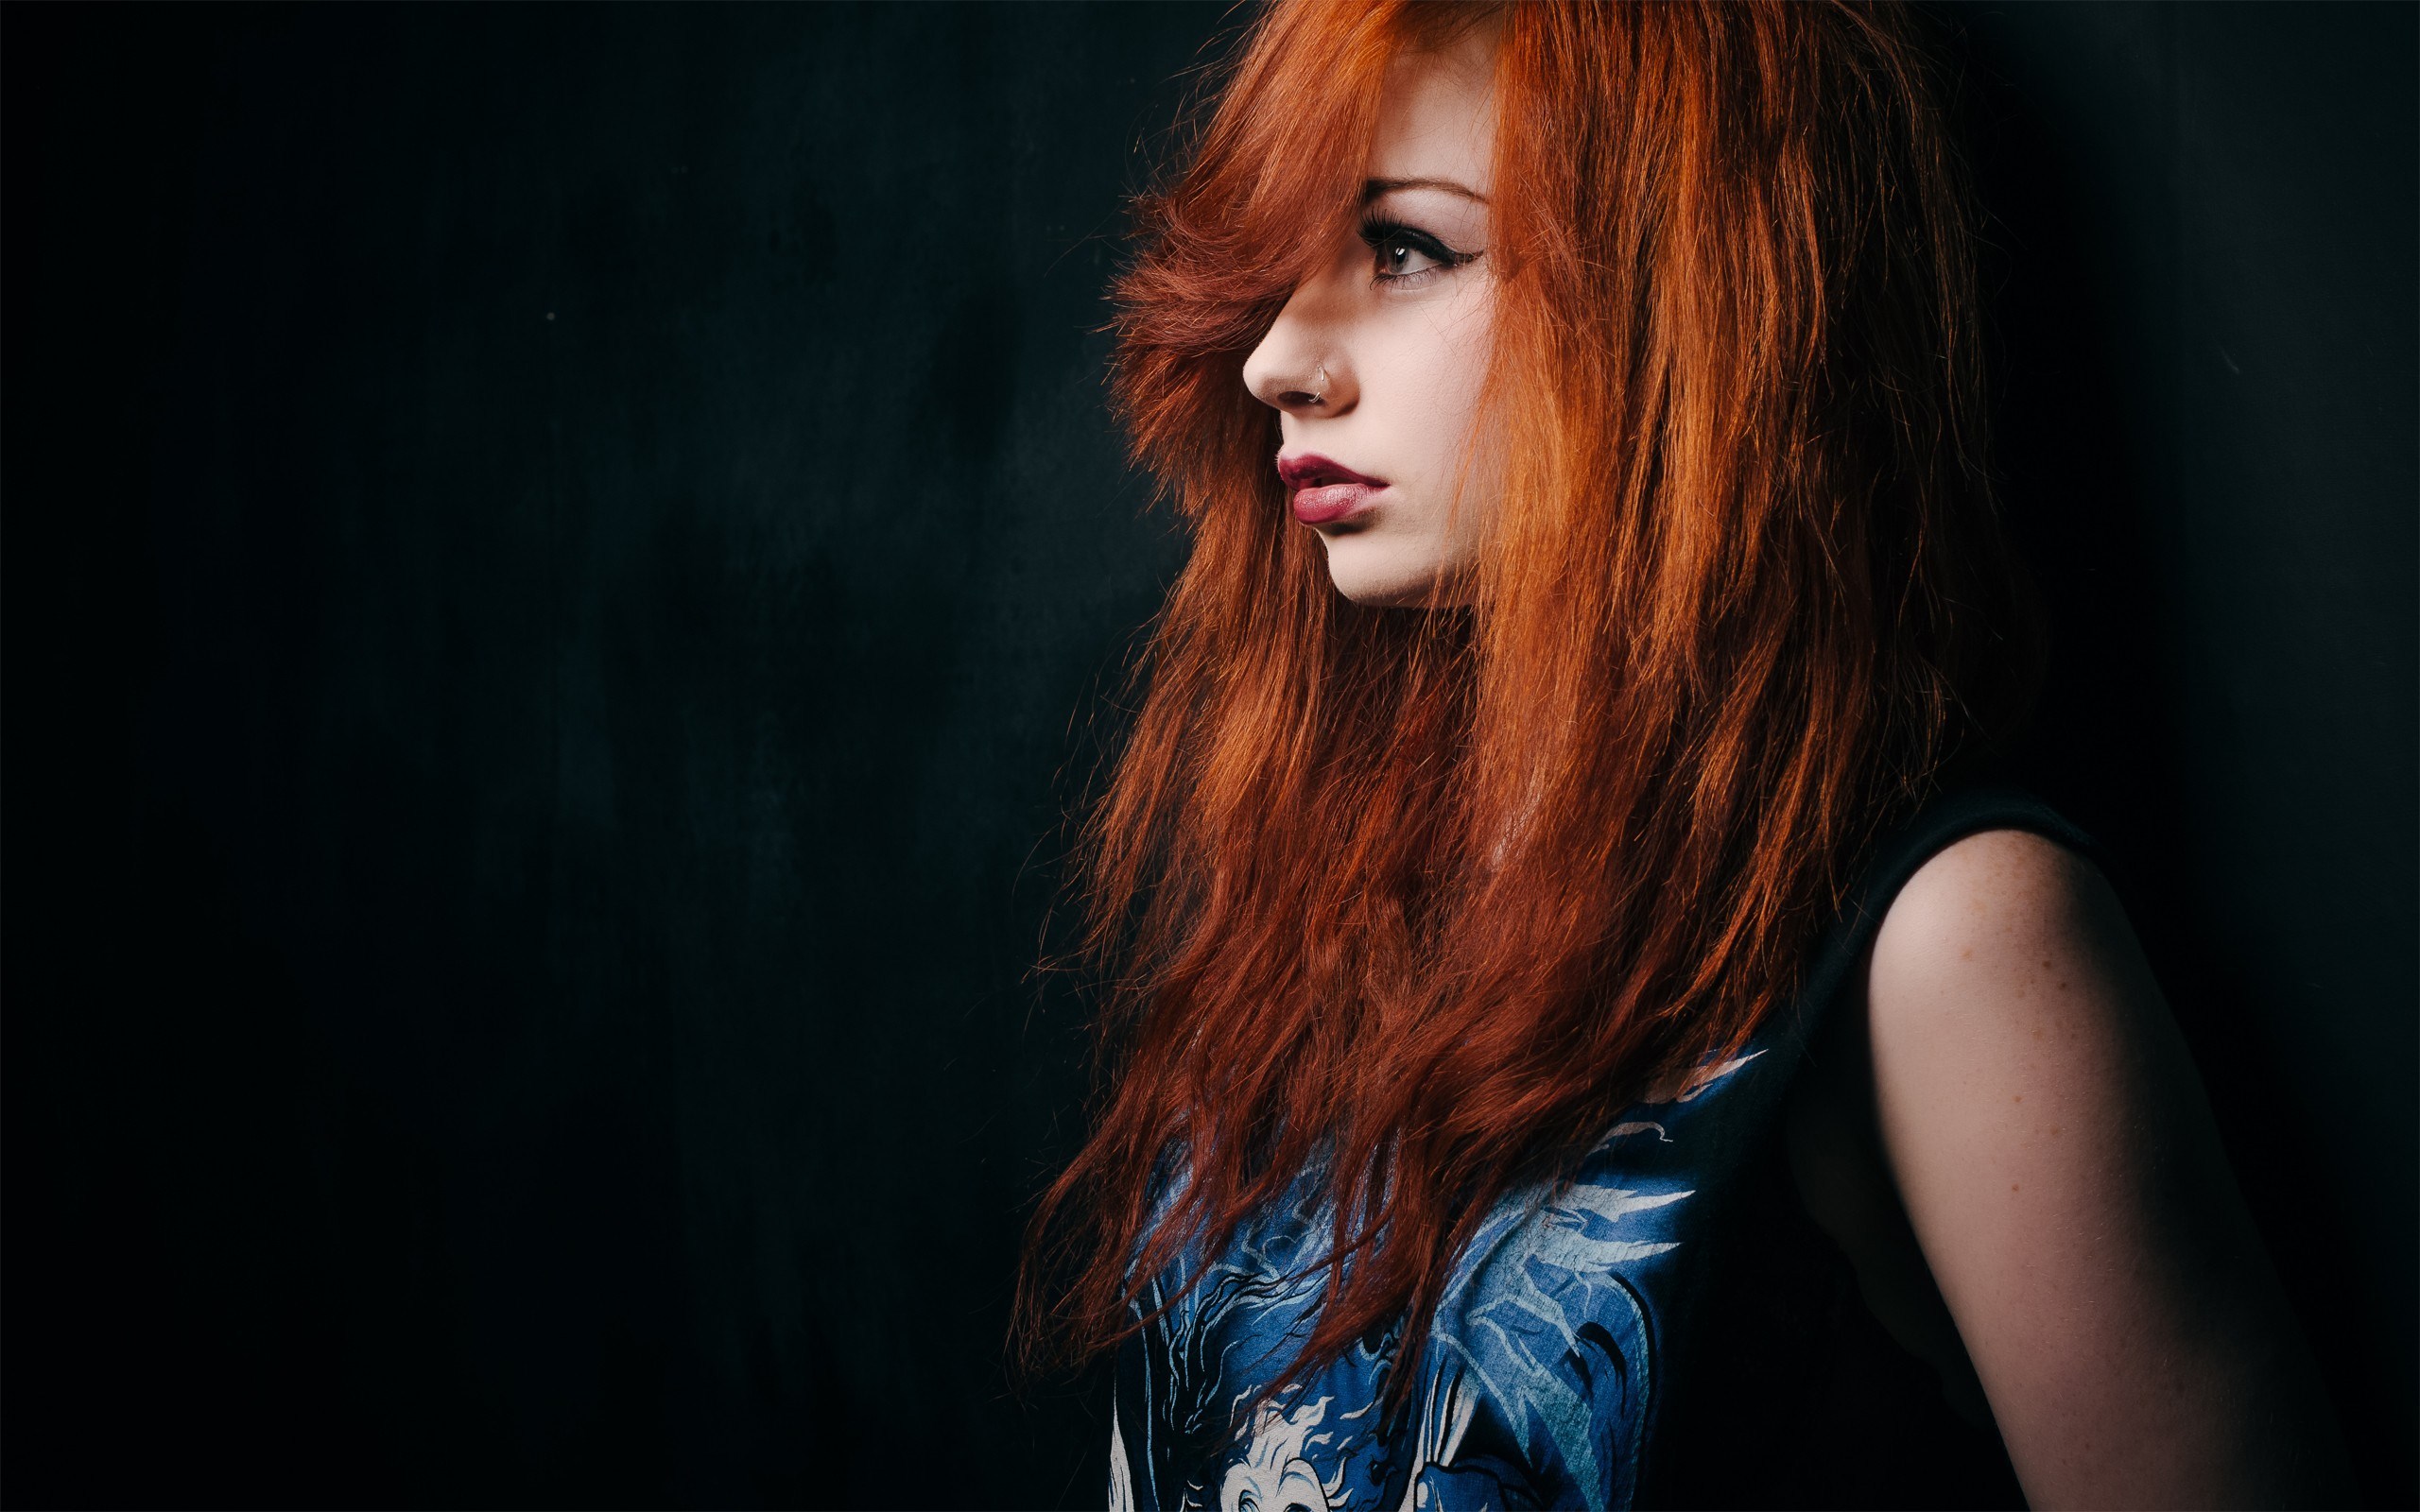 Lovely Girl Redhead Piercing Photo Wallpaper 2560x1600 20250